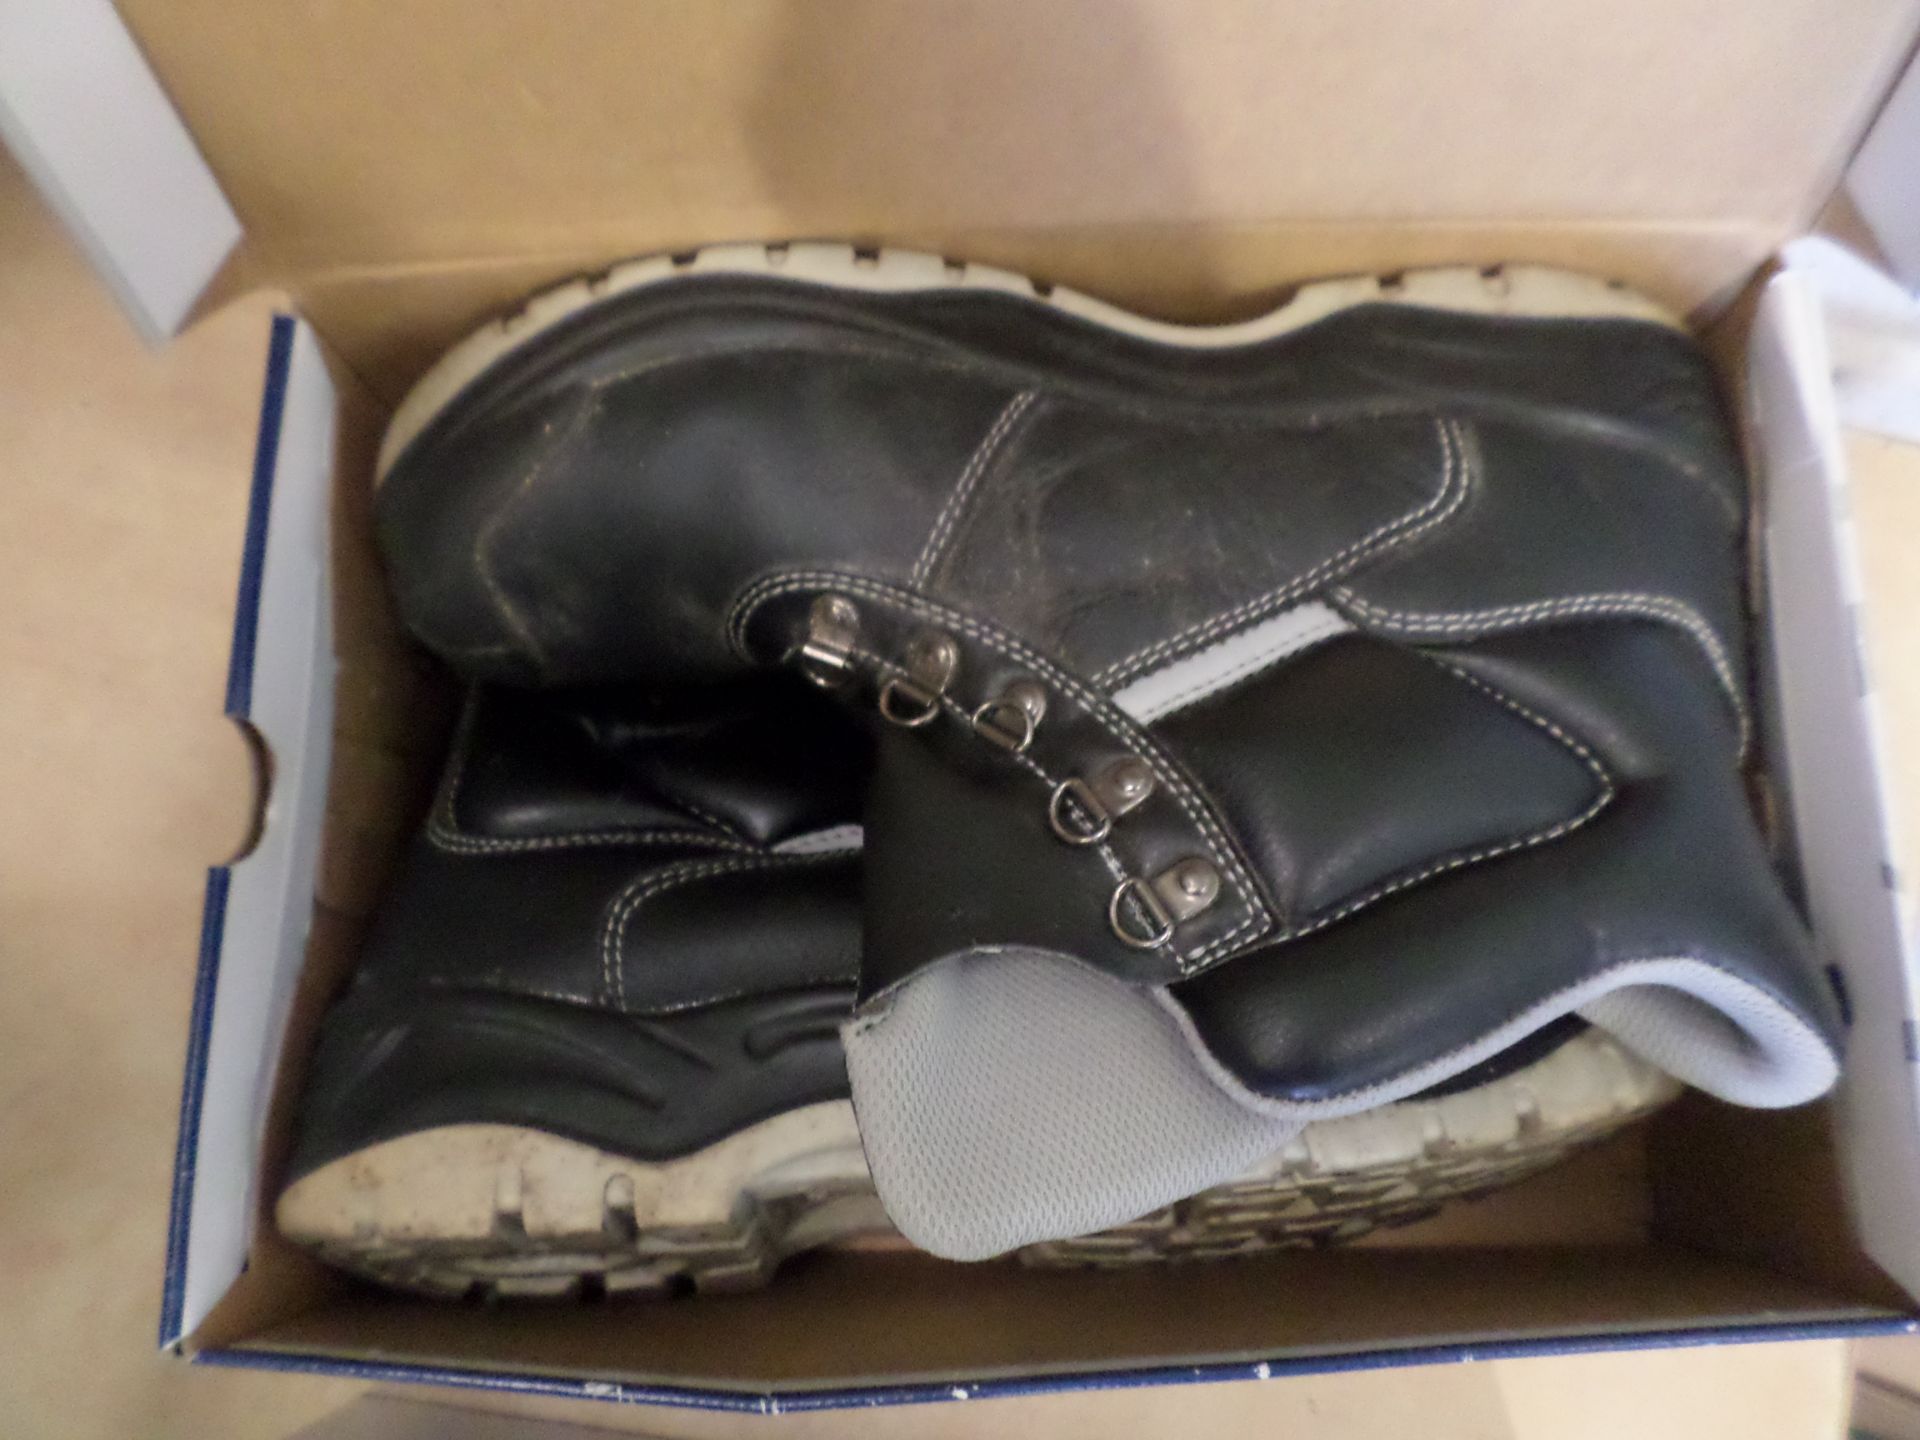 Steel cap WS Workwear work boots size 43, black, worn once